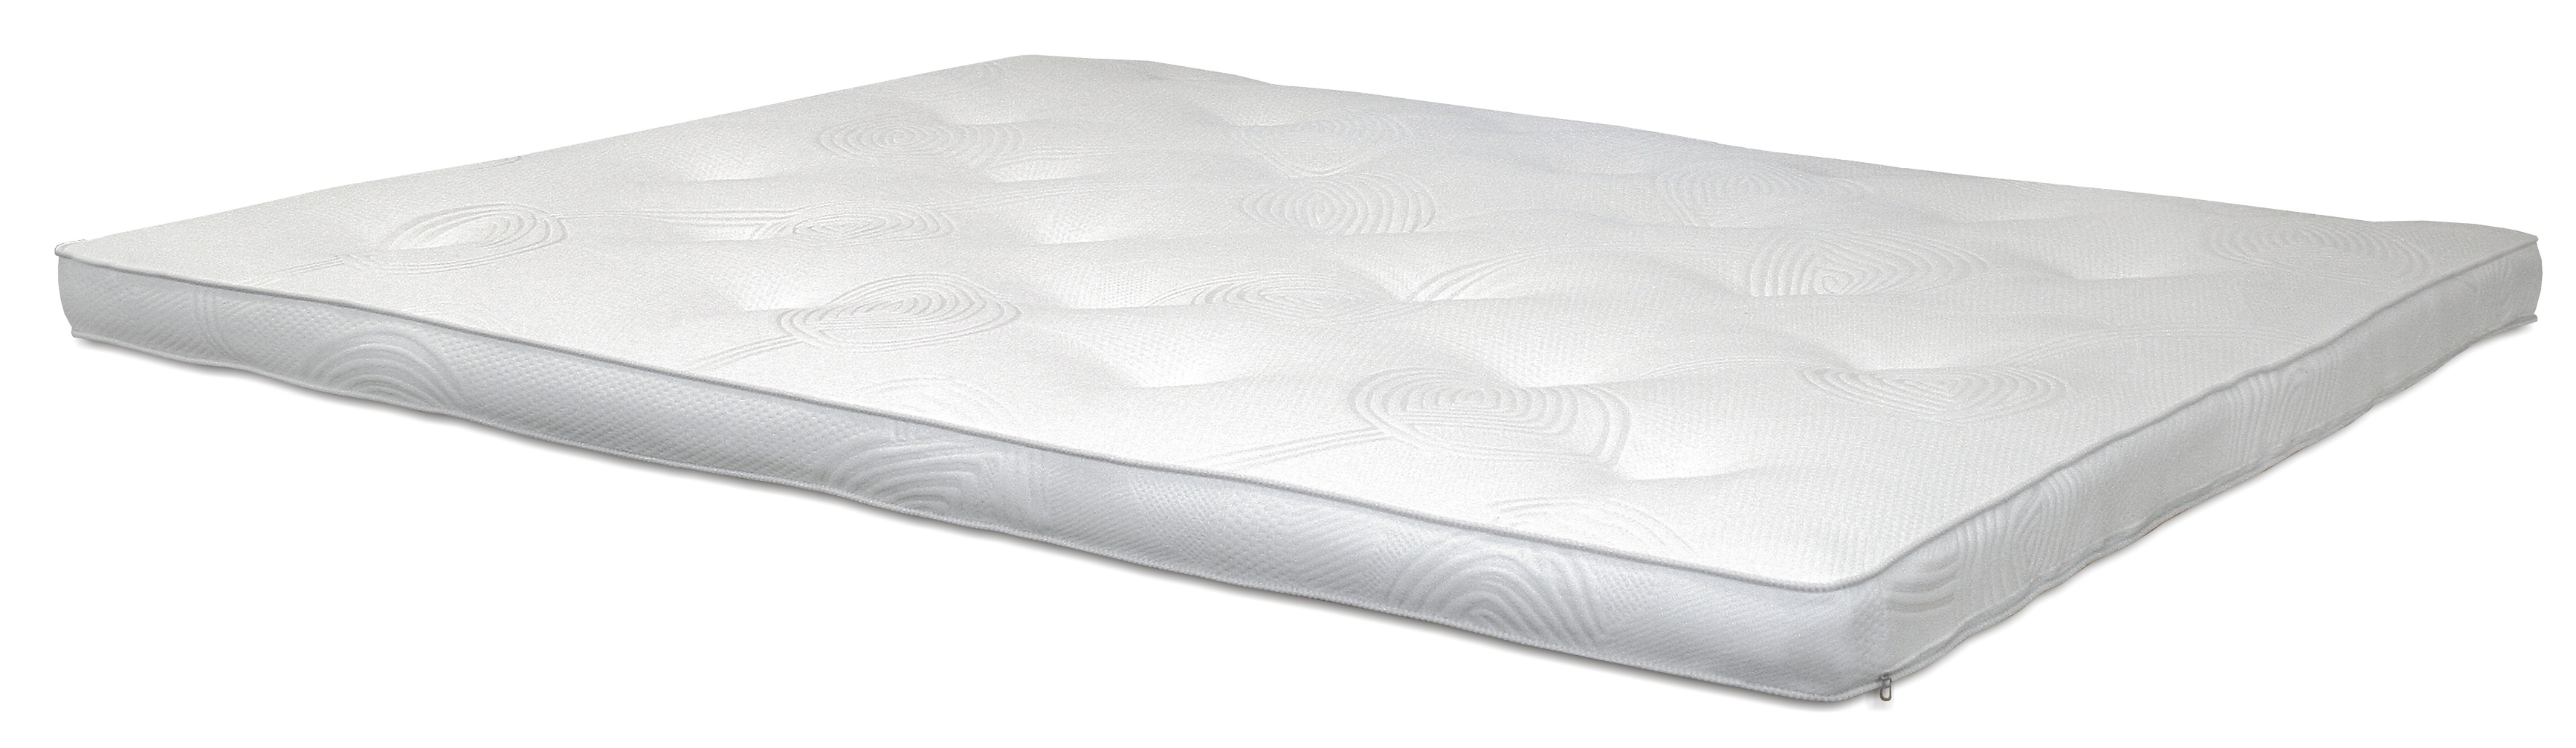 GRAND TOP mattress WHITE 1 16